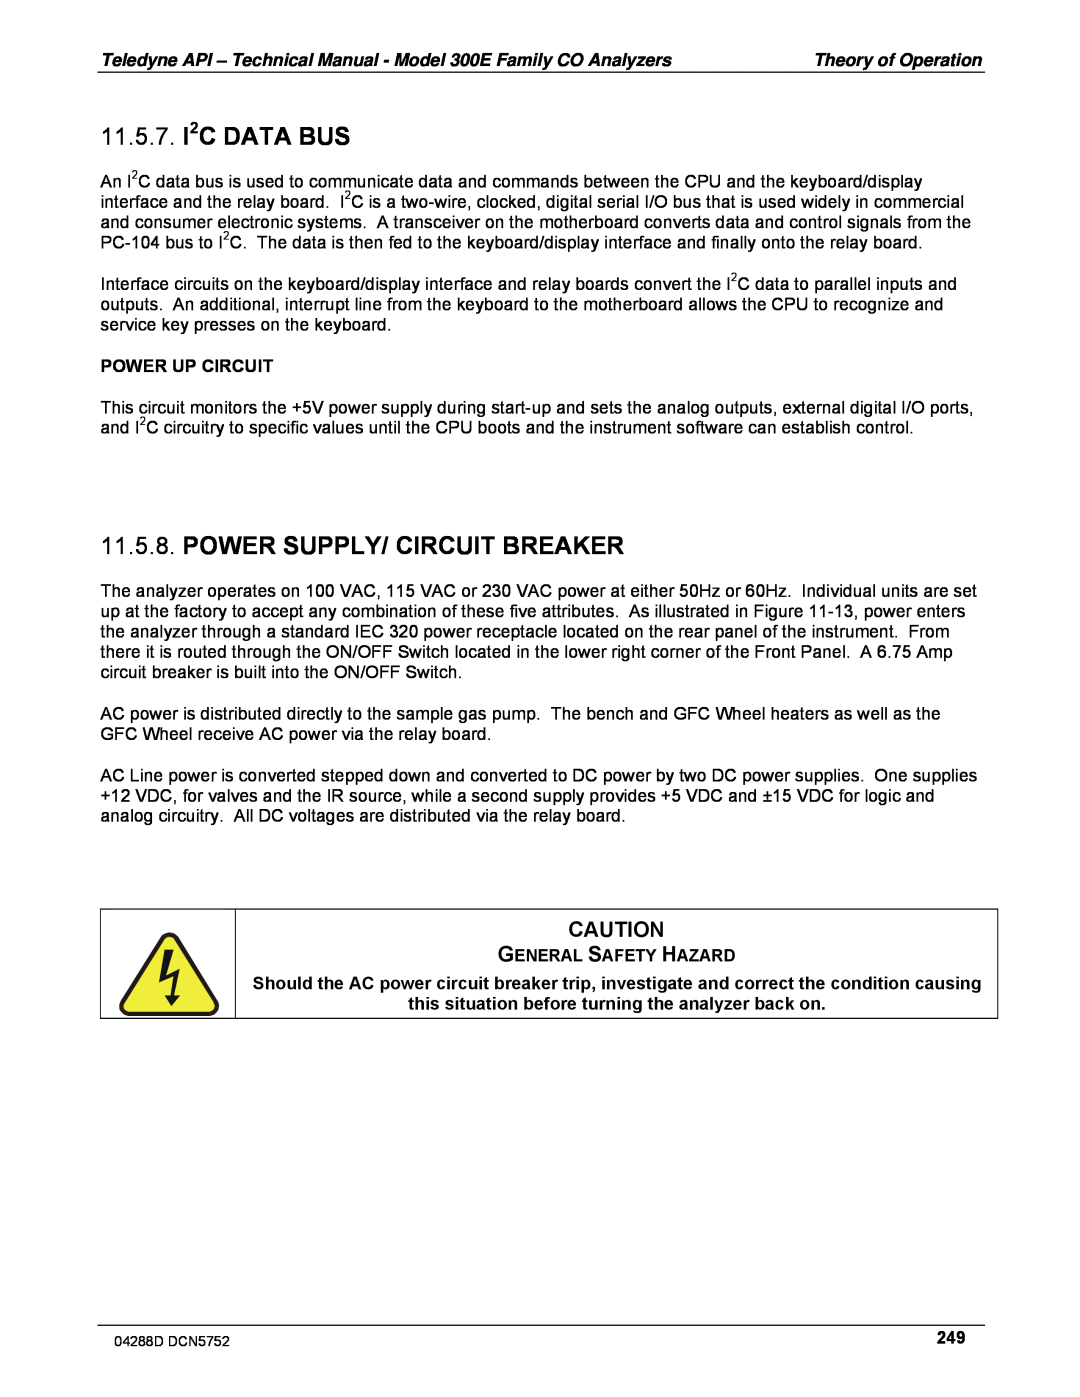 Teledyne M300EM 11.5.7.I2C DATA BUS, Power Supply/ Circuit Breaker, Power Up Circuit, General Safety Hazard 